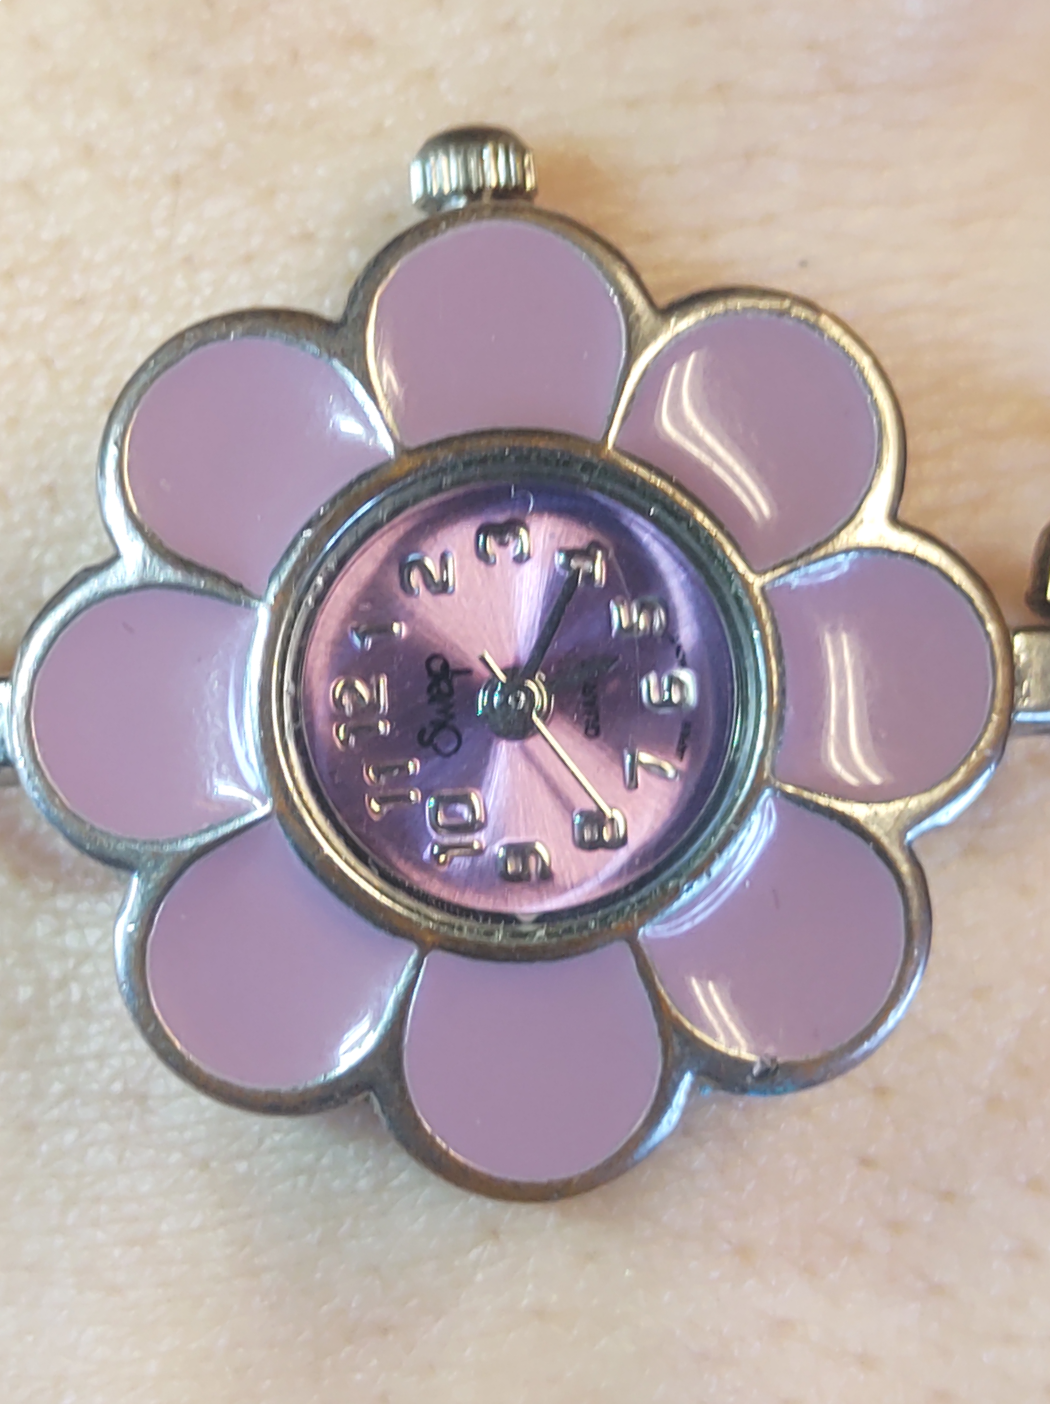 Swep enamel flower quartz watch pre-owned fun spring time watch..